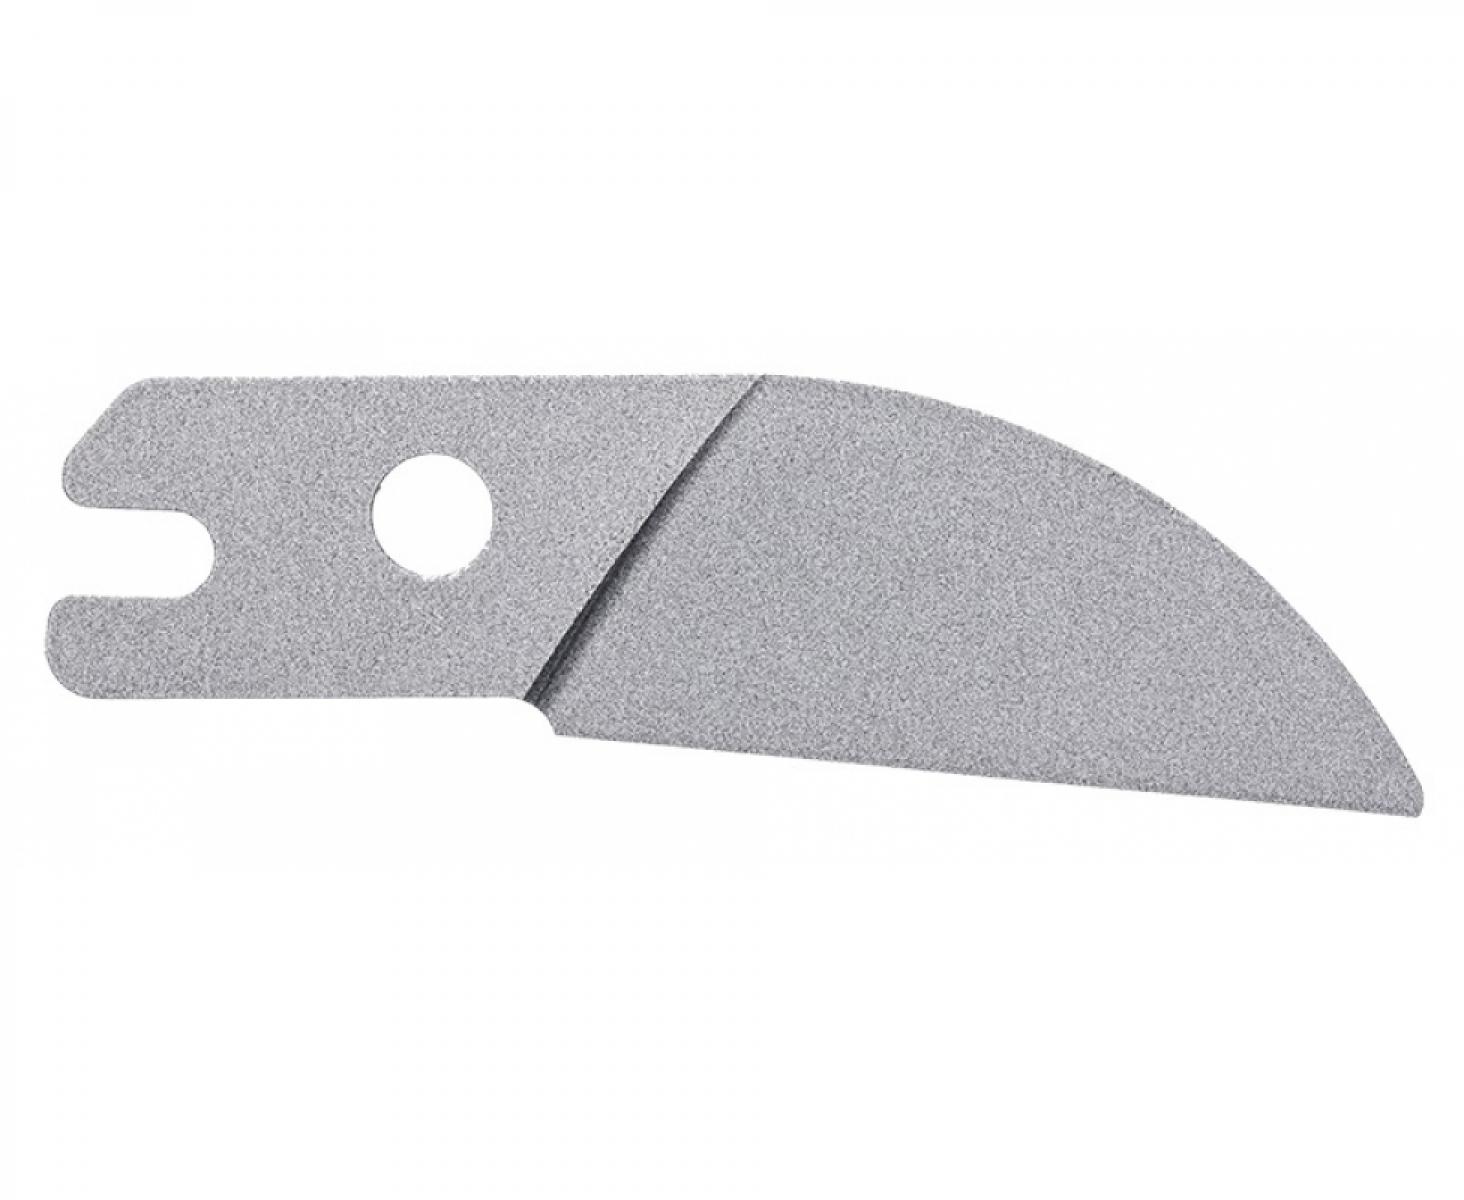 Запасное лезвие для ножниц 9455200 Knipex KN-945920001